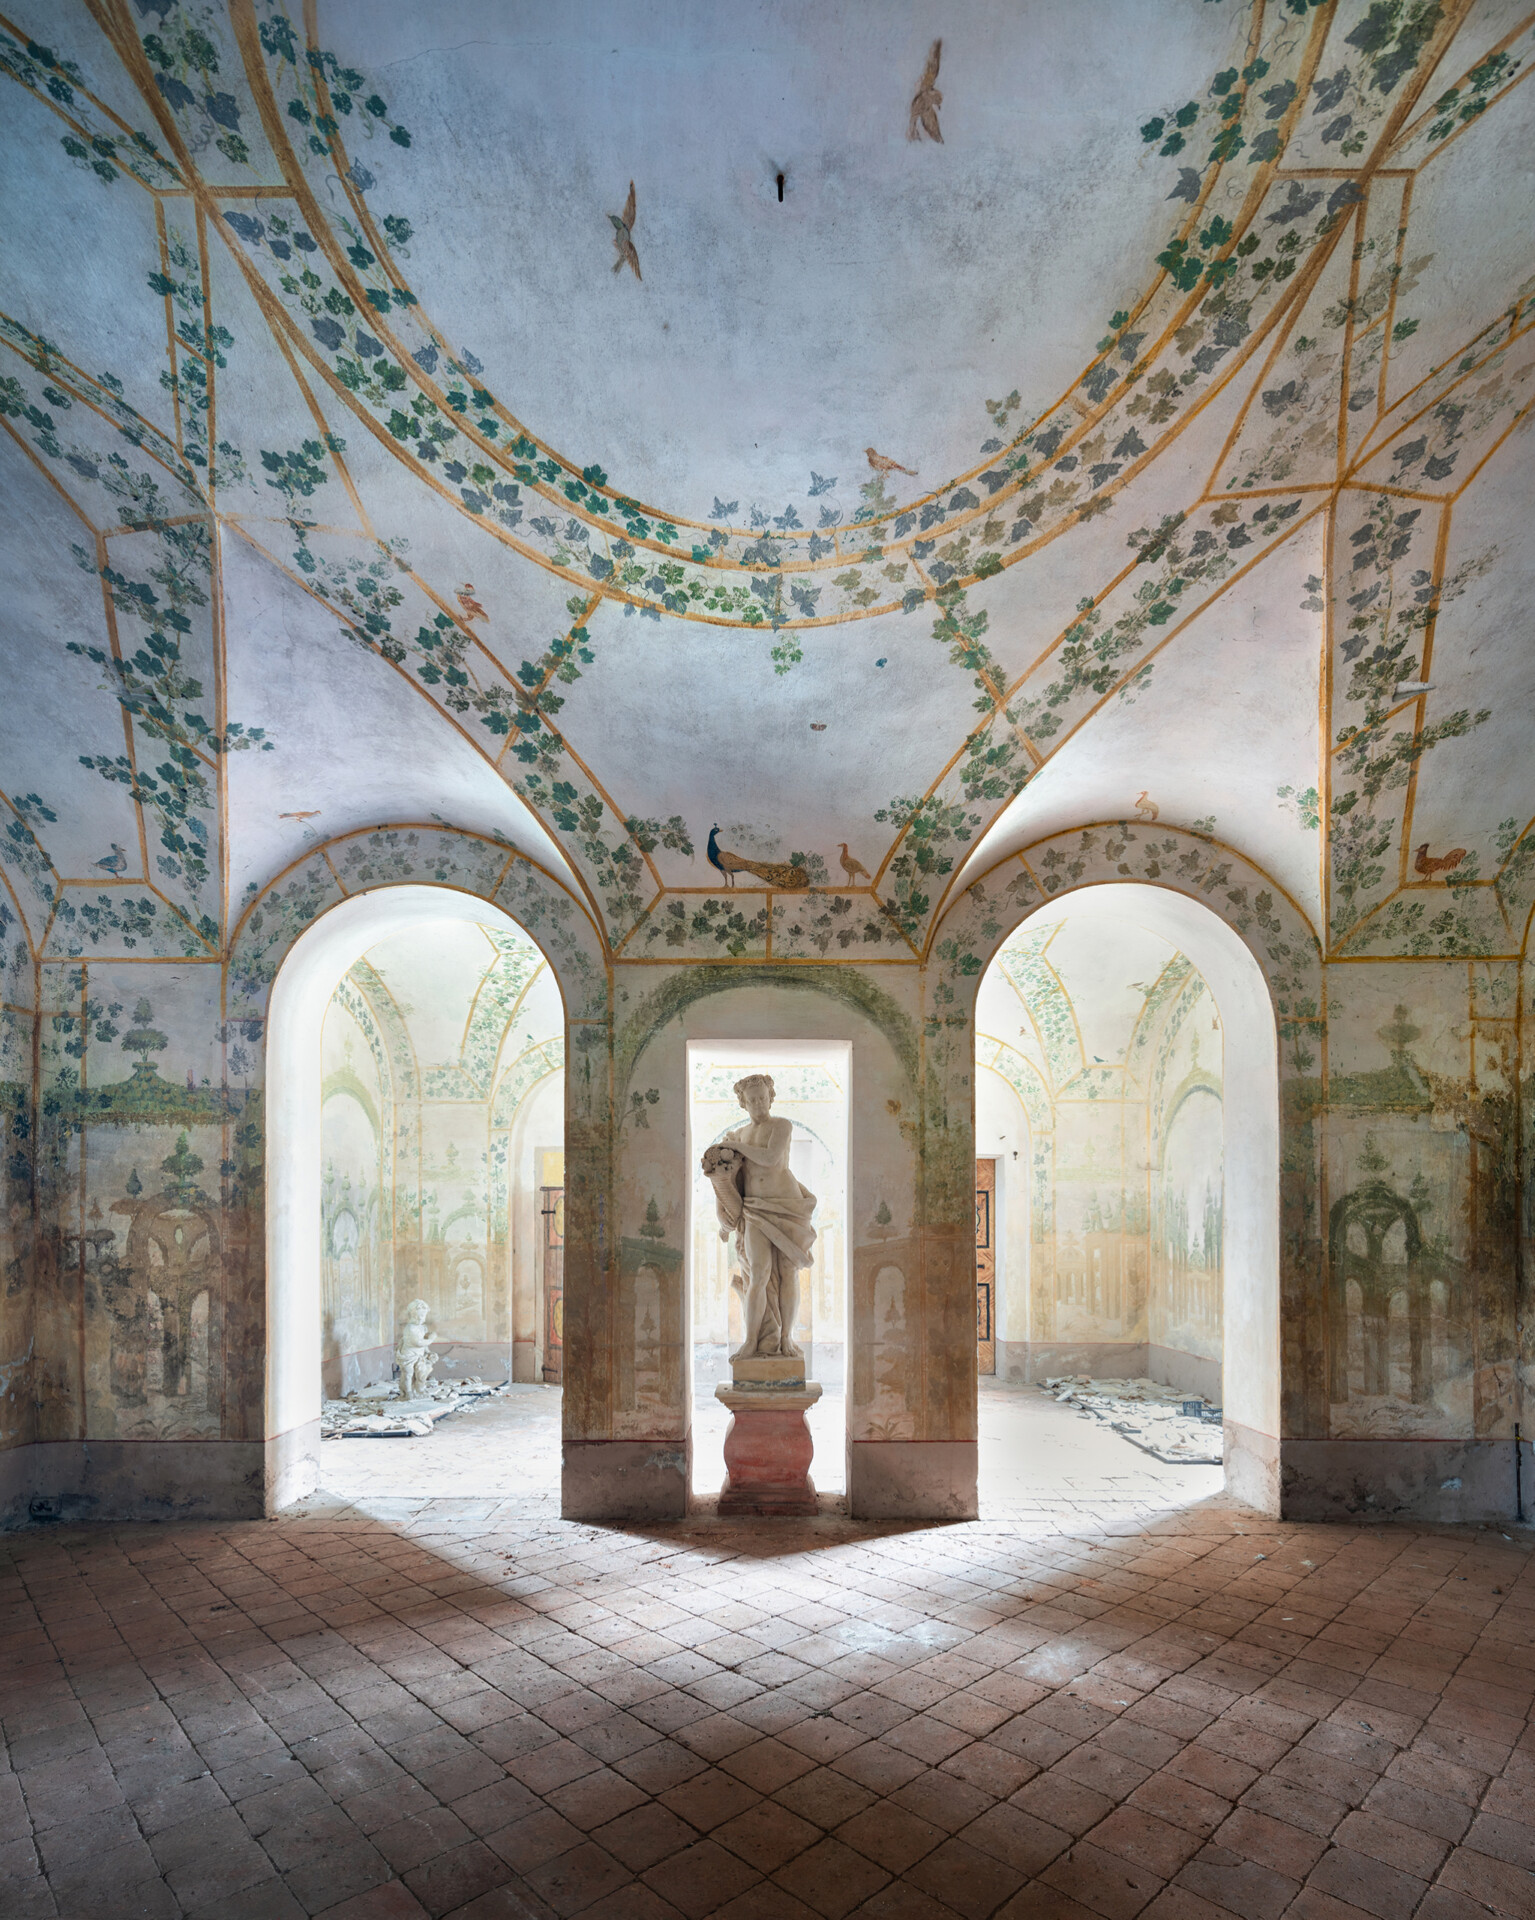 Daydream - Abandoned Villa in Italy